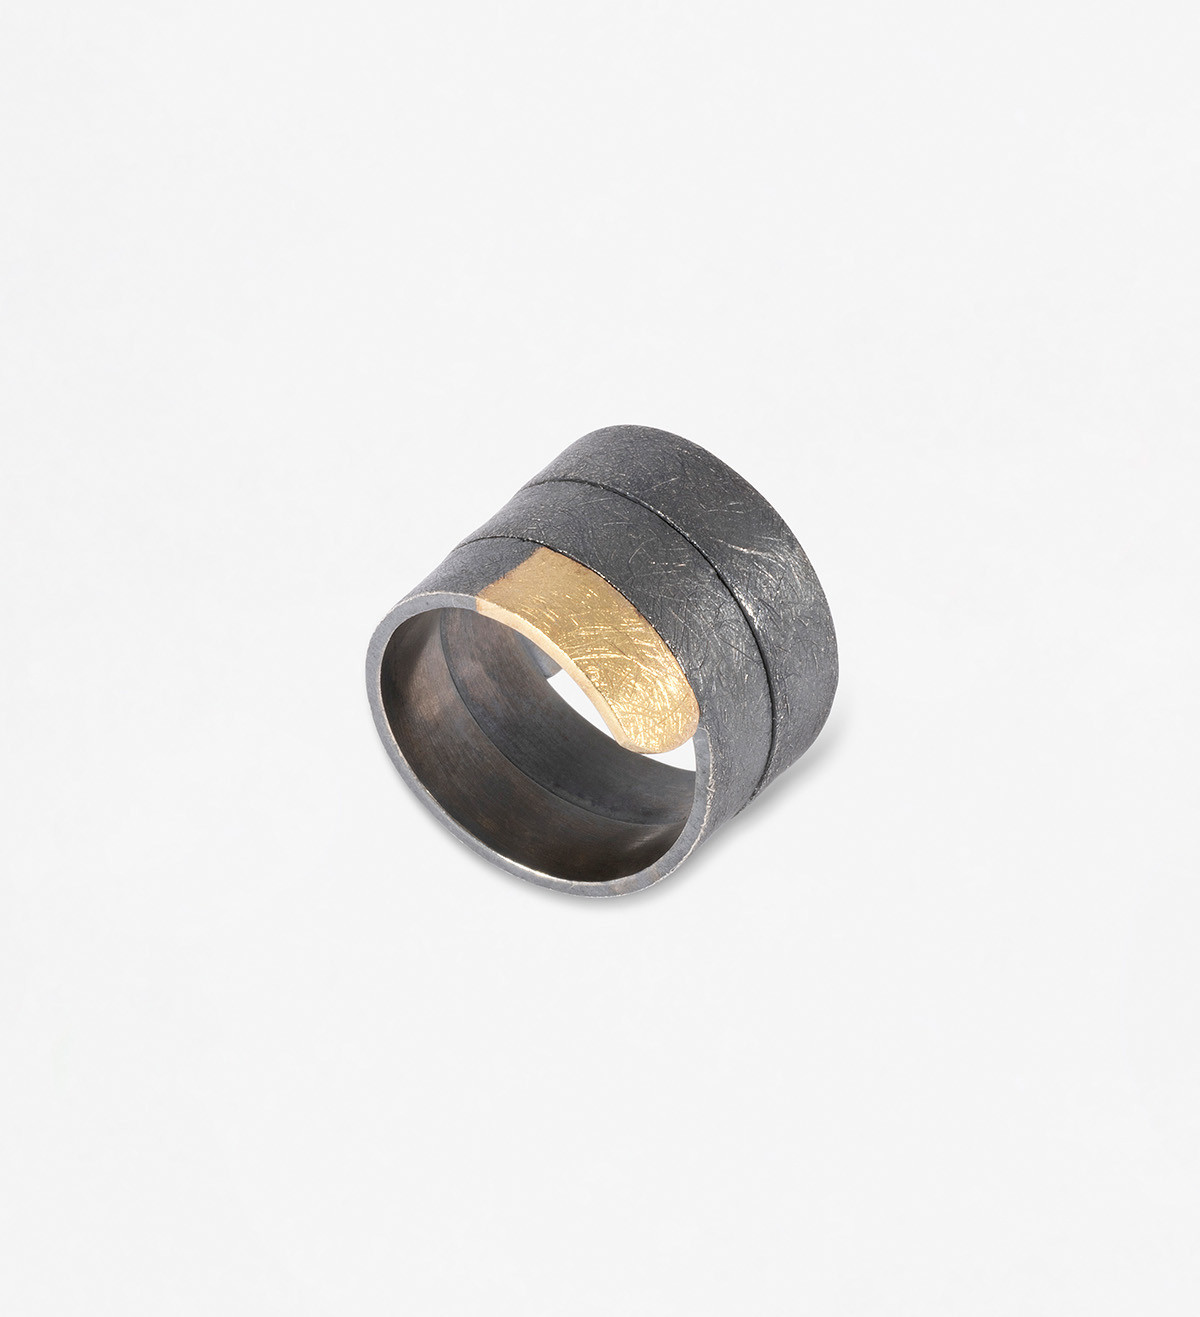 18k gold and silver ring Posidonia 17mm